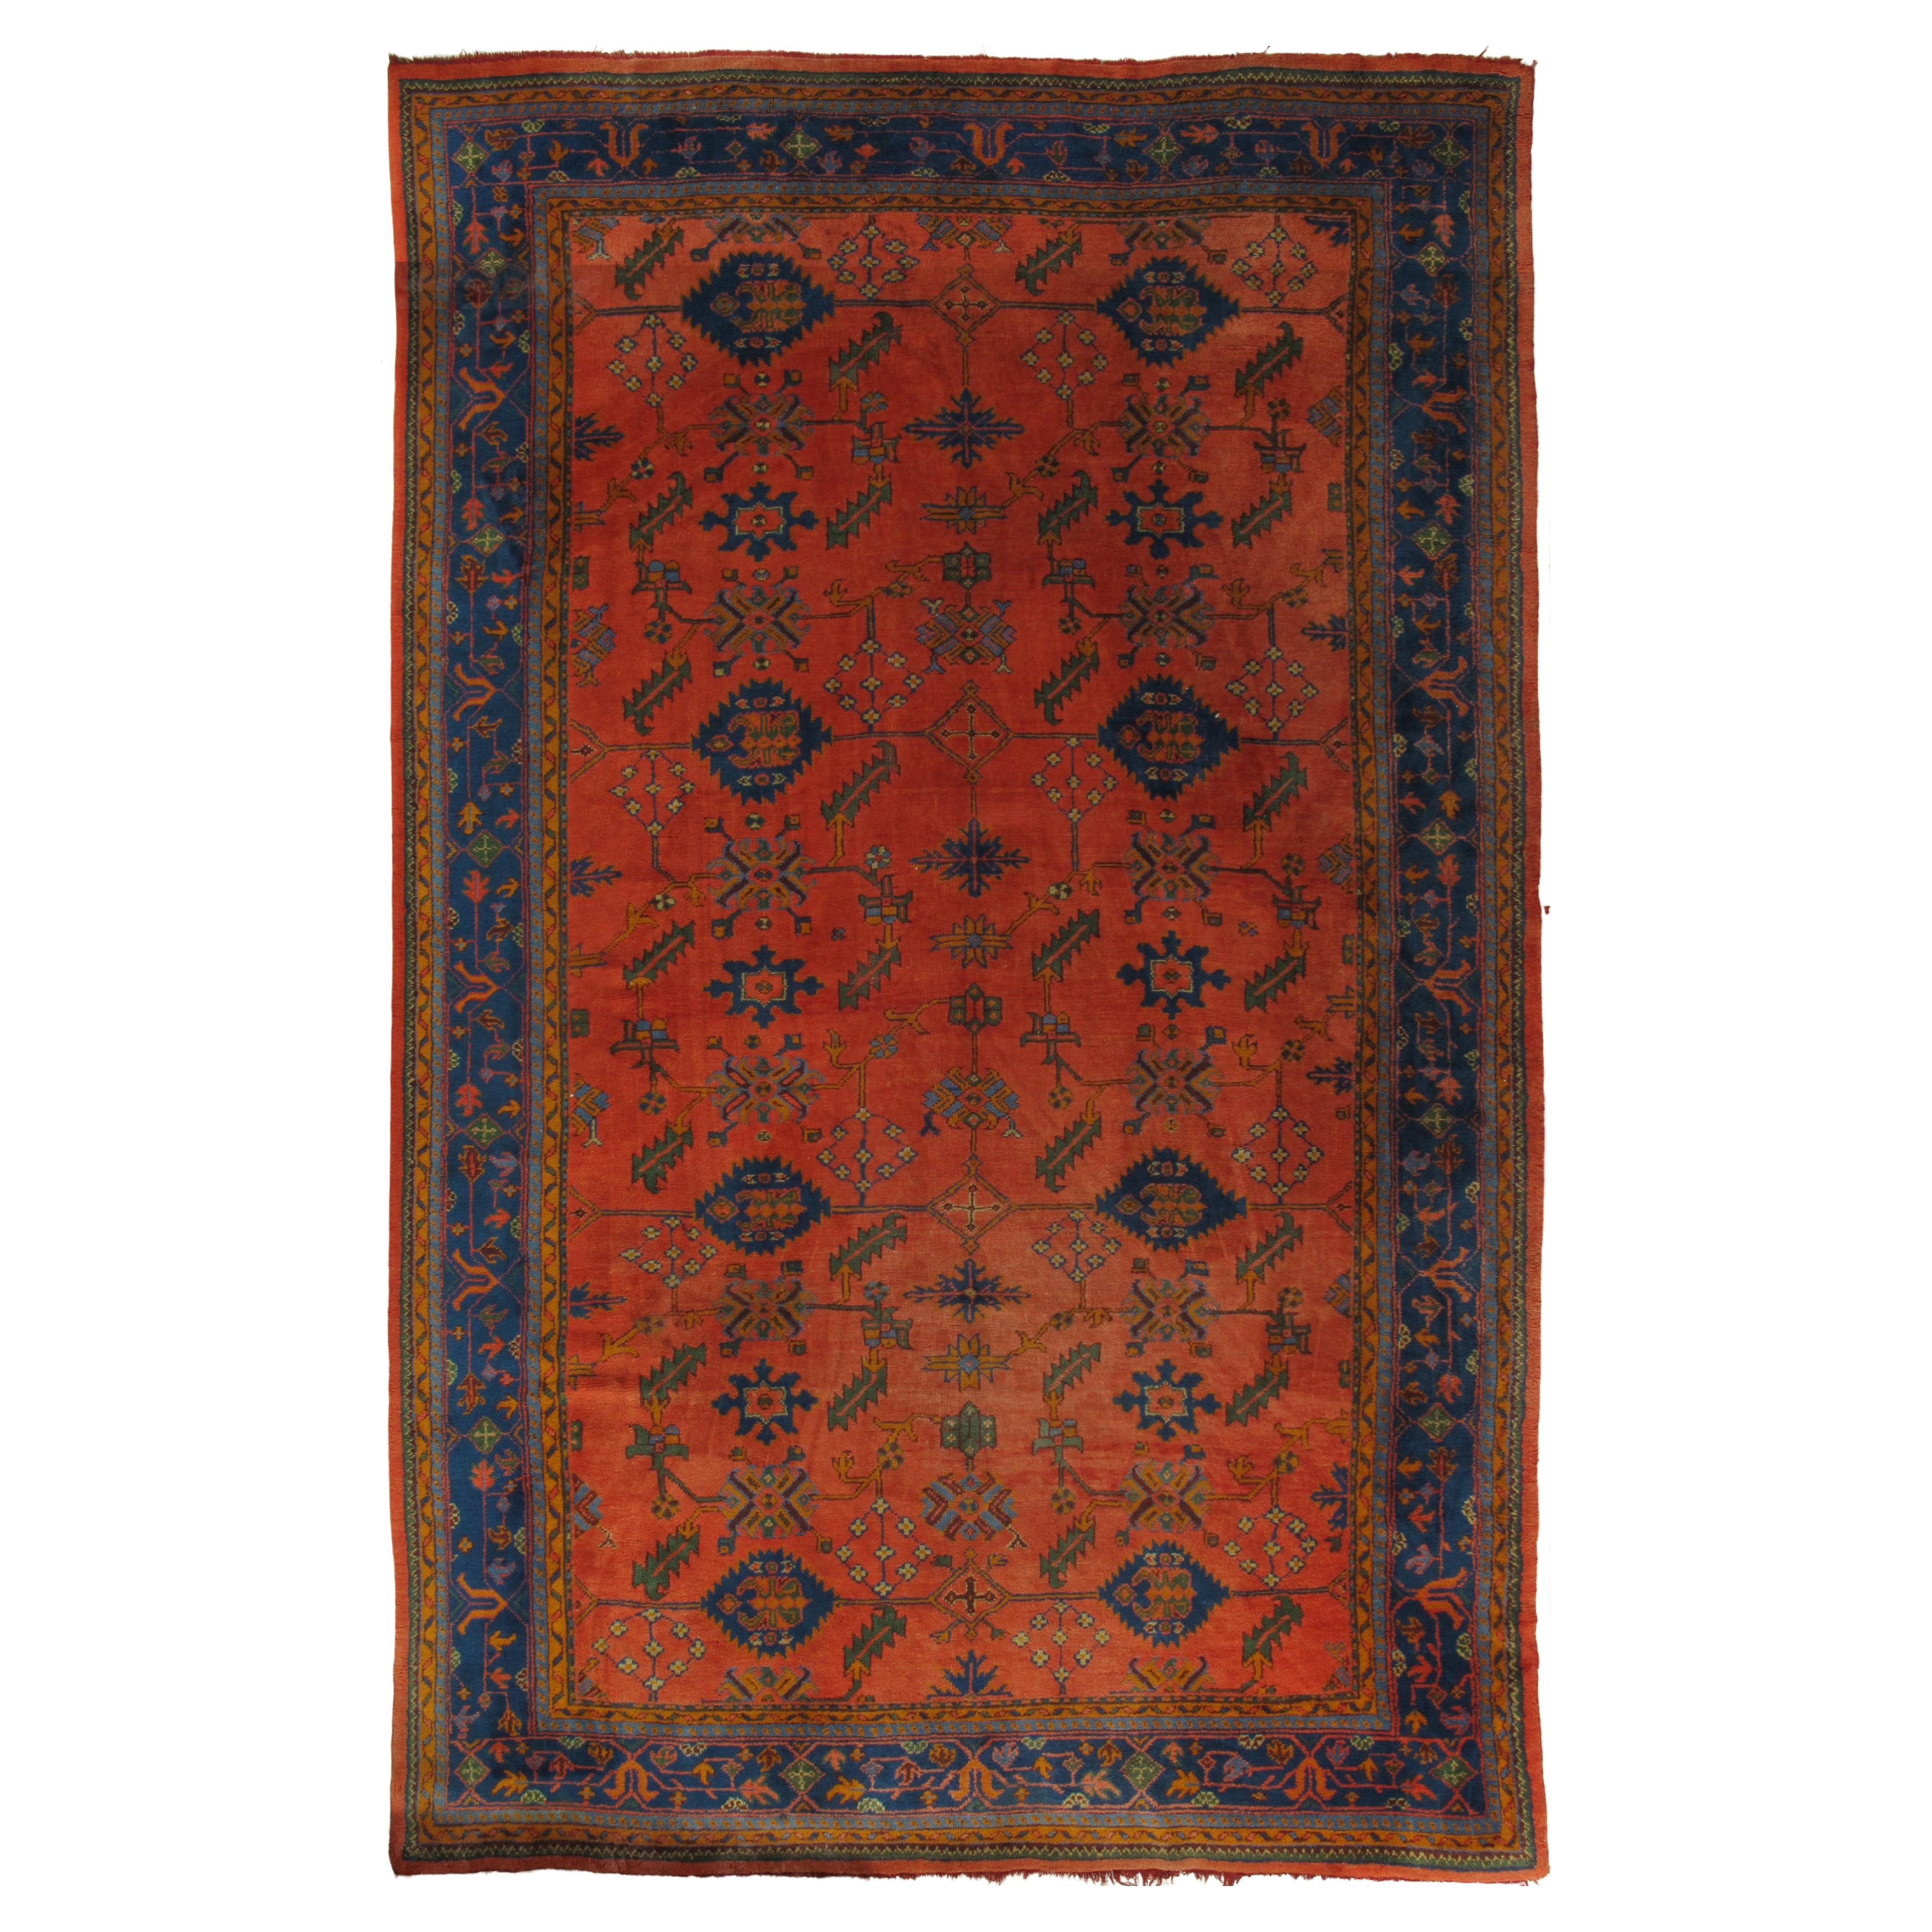 Tapis d'Oushak ancien, tapis oriental, tapis fait à la main, bleu royal et corail